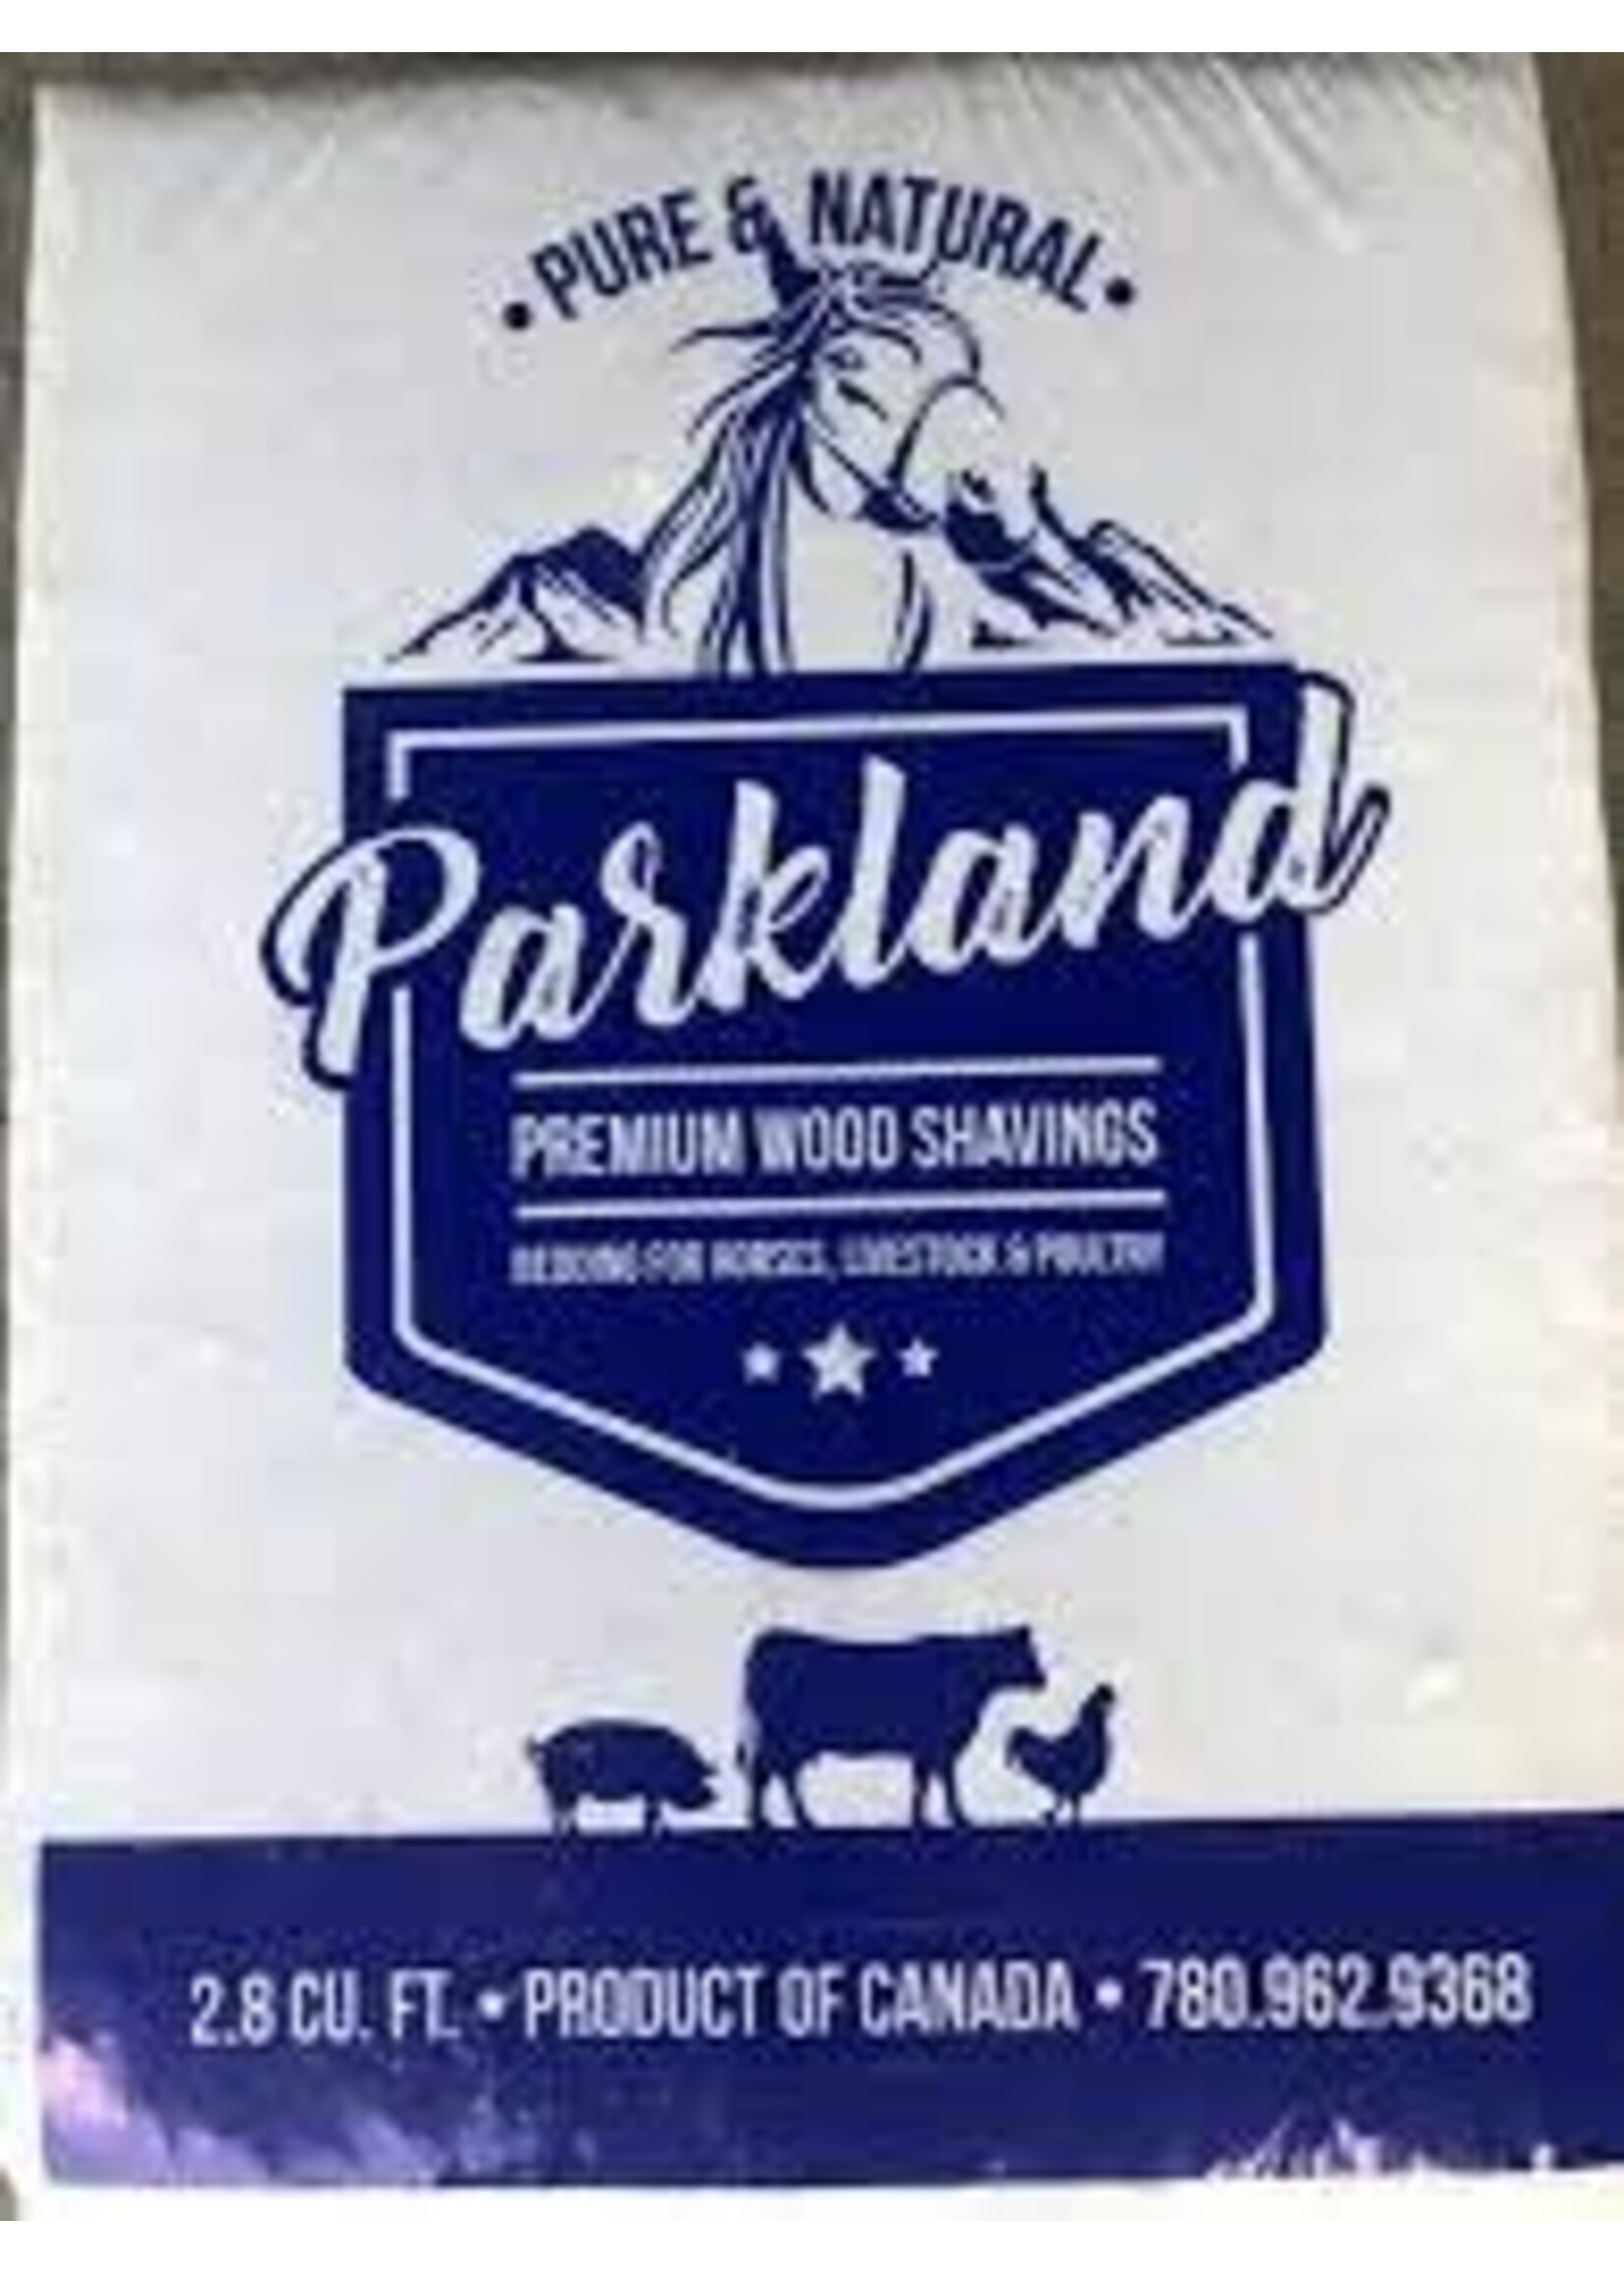 Parkland Shavings - Baled - 2.8 Cubic Feet